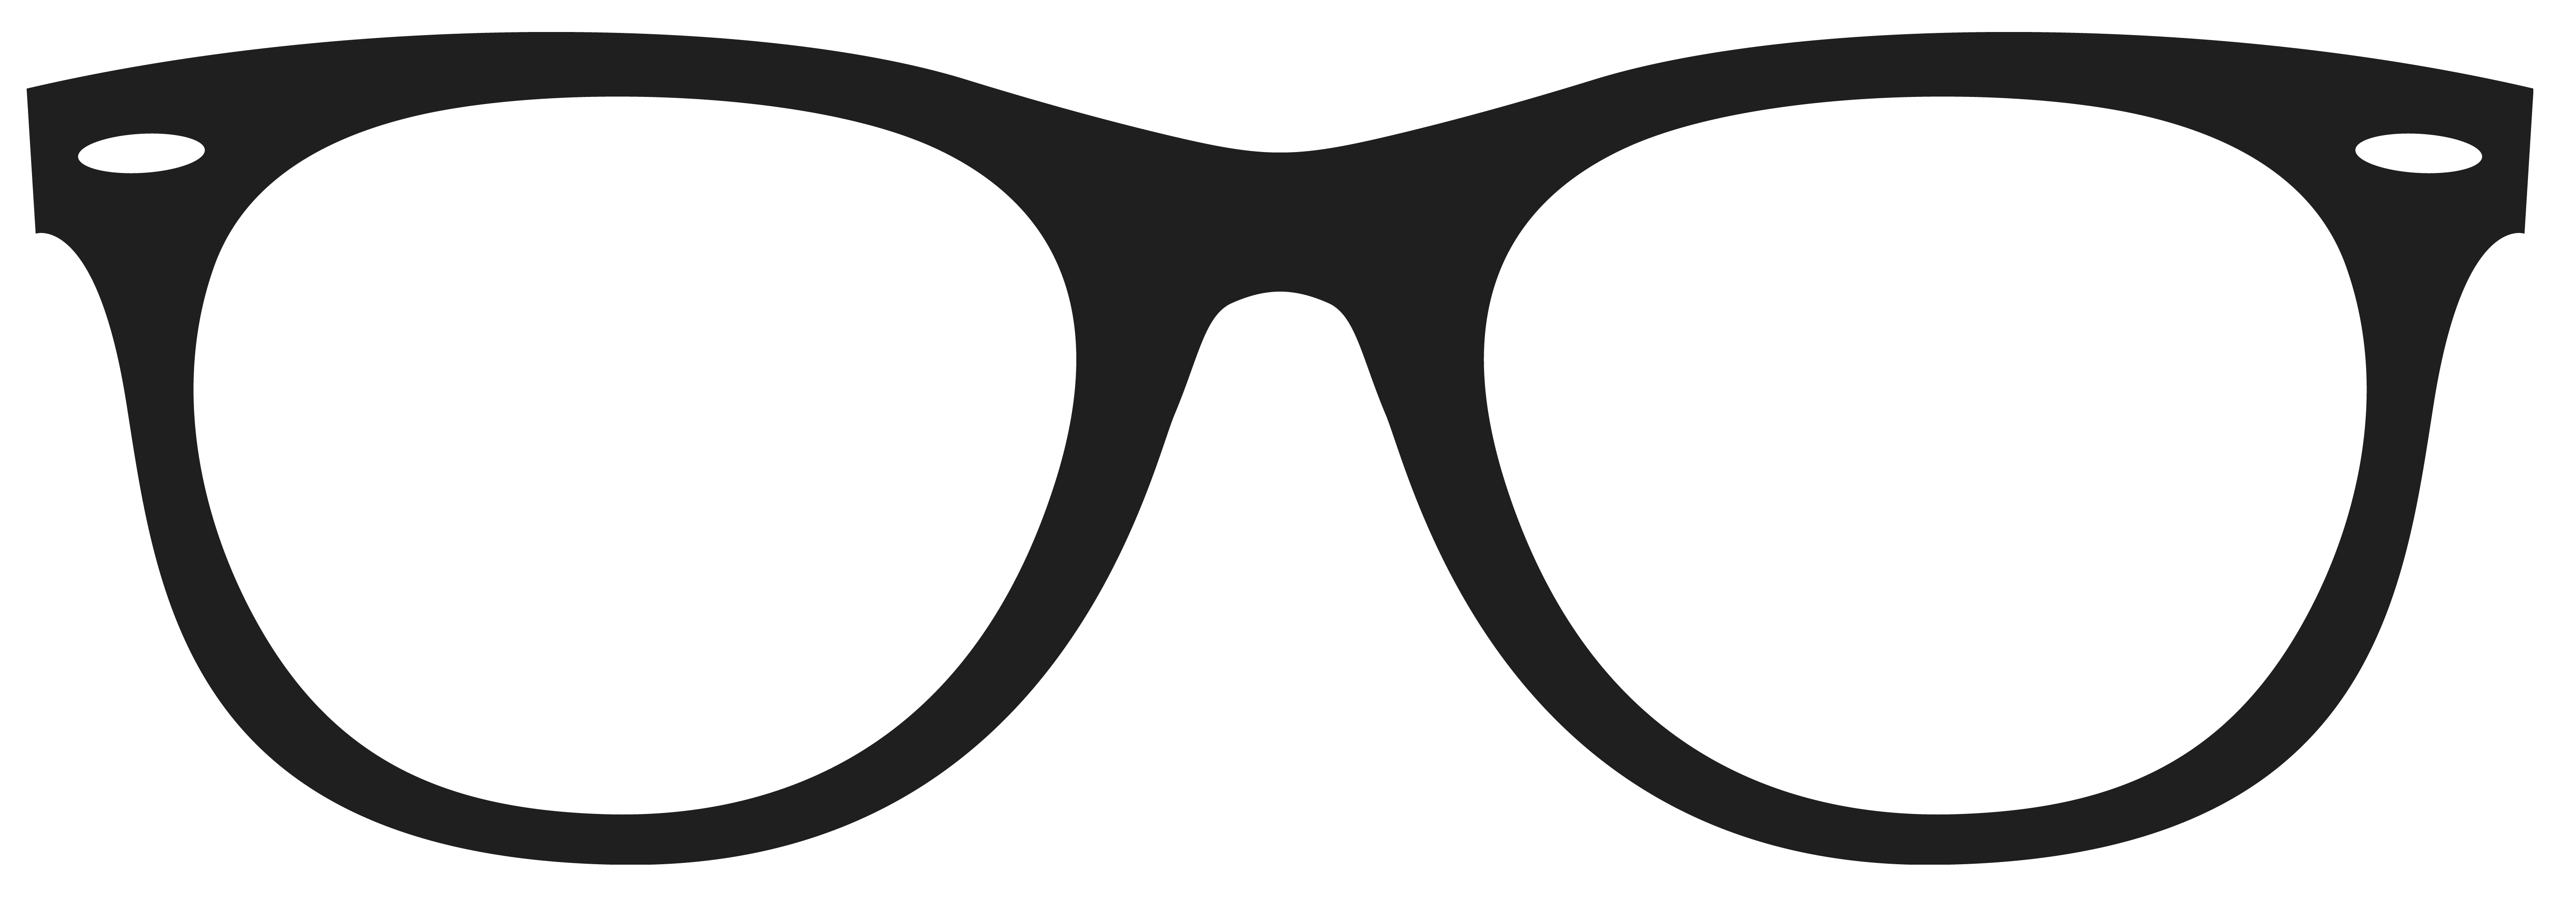 Sunglasses PNG Image